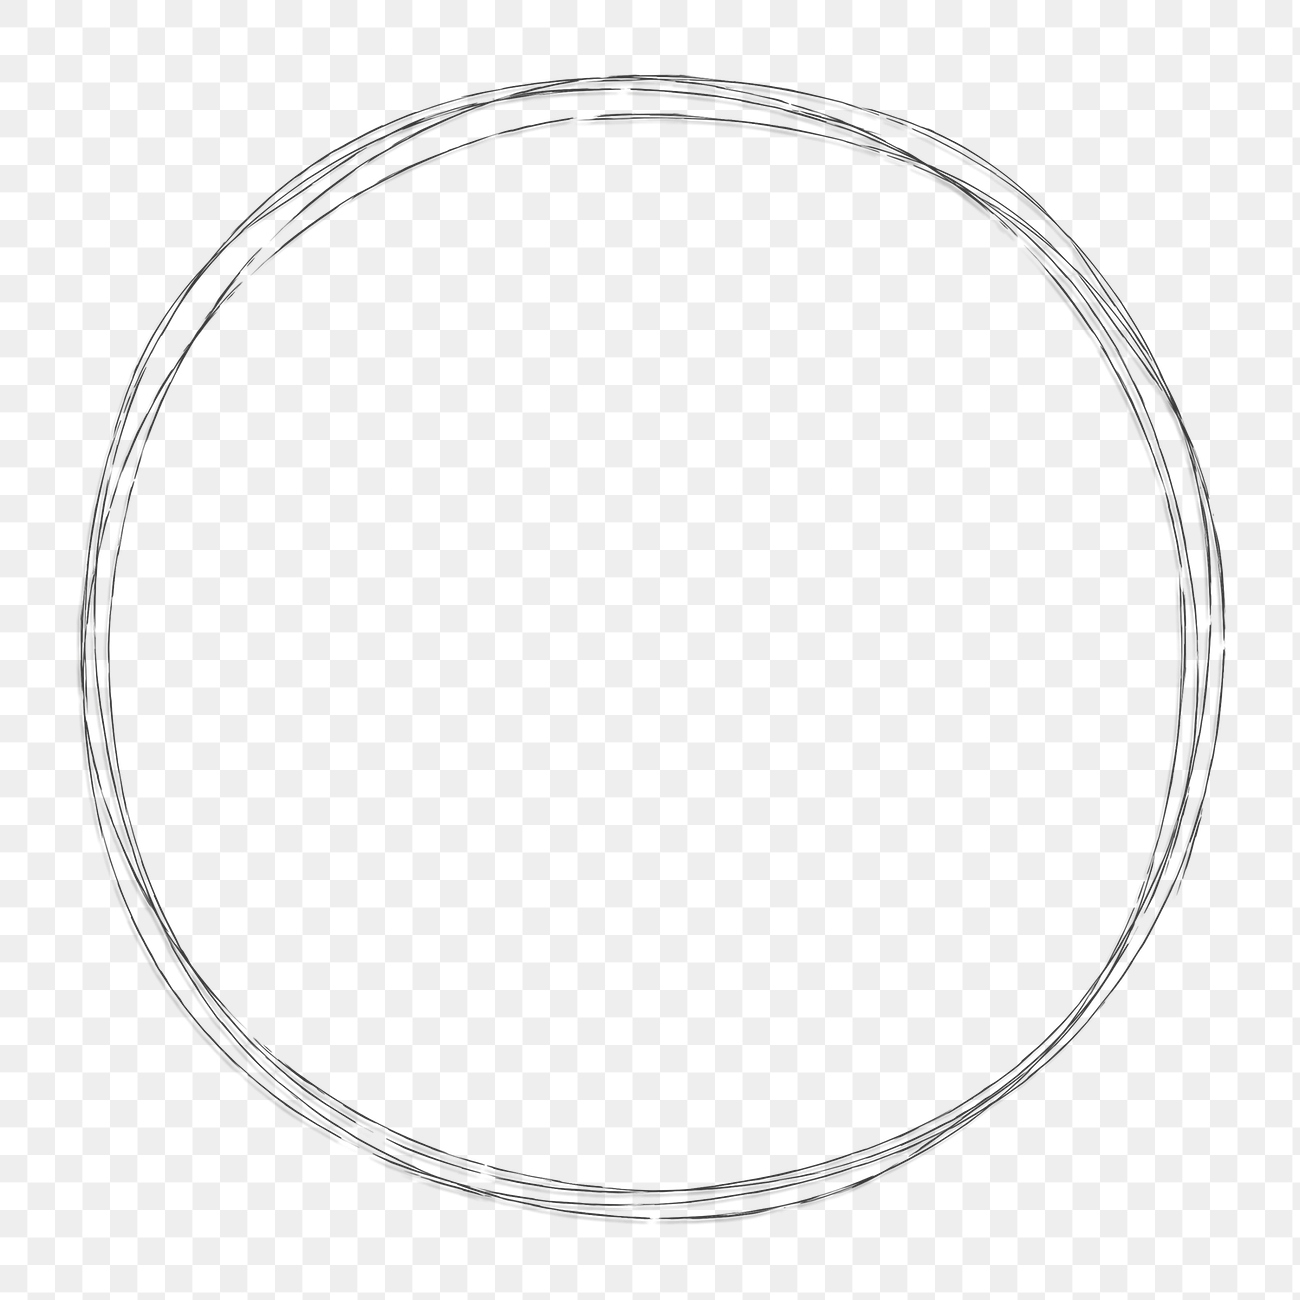 Silver round frame design element | Premium PNG - rawpixel